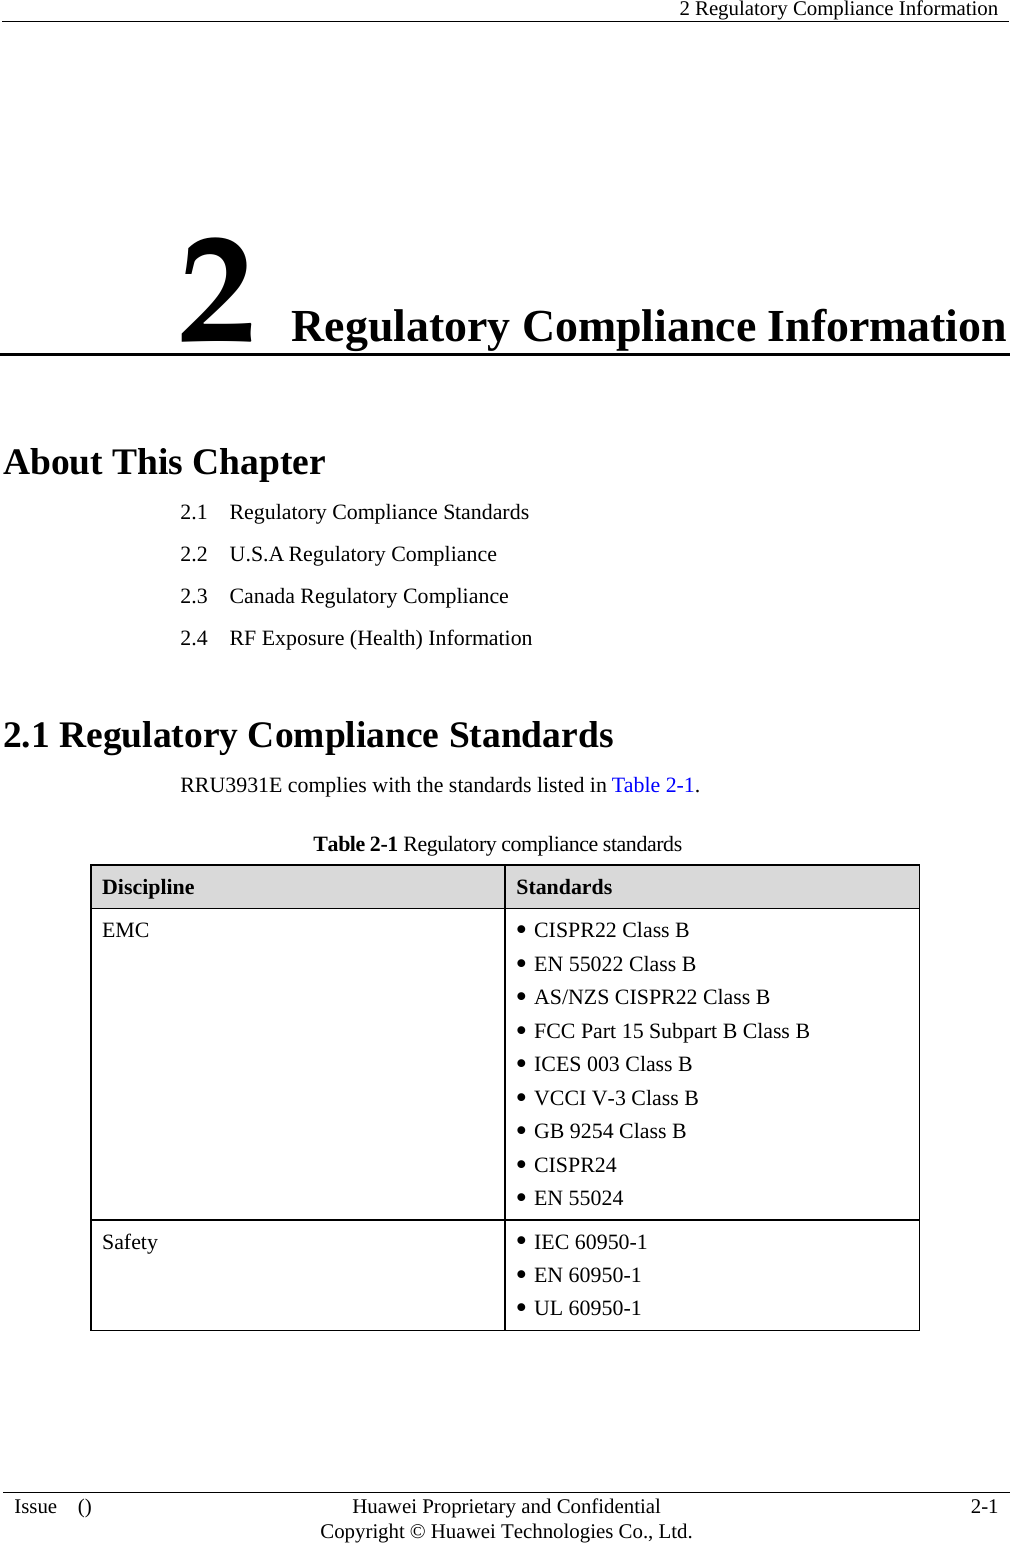    2 Regulatory Compliance Information Issue  ()  Huawei Proprietary and Confidential     Copyright © Huawei Technologies Co., Ltd. 2-1 2 Regulatory Compliance Information About This Chapter 2.1    Regulatory Compliance Standards 2.2  U.S.A Regulatory Compliance 2.3  Canada Regulatory Compliance 2.4    RF Exposure (Health) Information 2.1 Regulatory Compliance Standards RRU3931E complies with the standards listed in Table 2-1. Table 2-1 Regulatory compliance standards Discipline  Standards EMC  z CISPR22 Class B   z EN 55022 Class B z AS/NZS CISPR22 Class B z FCC Part 15 Subpart B Class B z ICES 003 Class B z VCCI V-3 Class B z GB 9254 Class B   z CISPR24 z EN 55024 Safety  z IEC 60950-1 z EN 60950-1 z UL 60950-1 